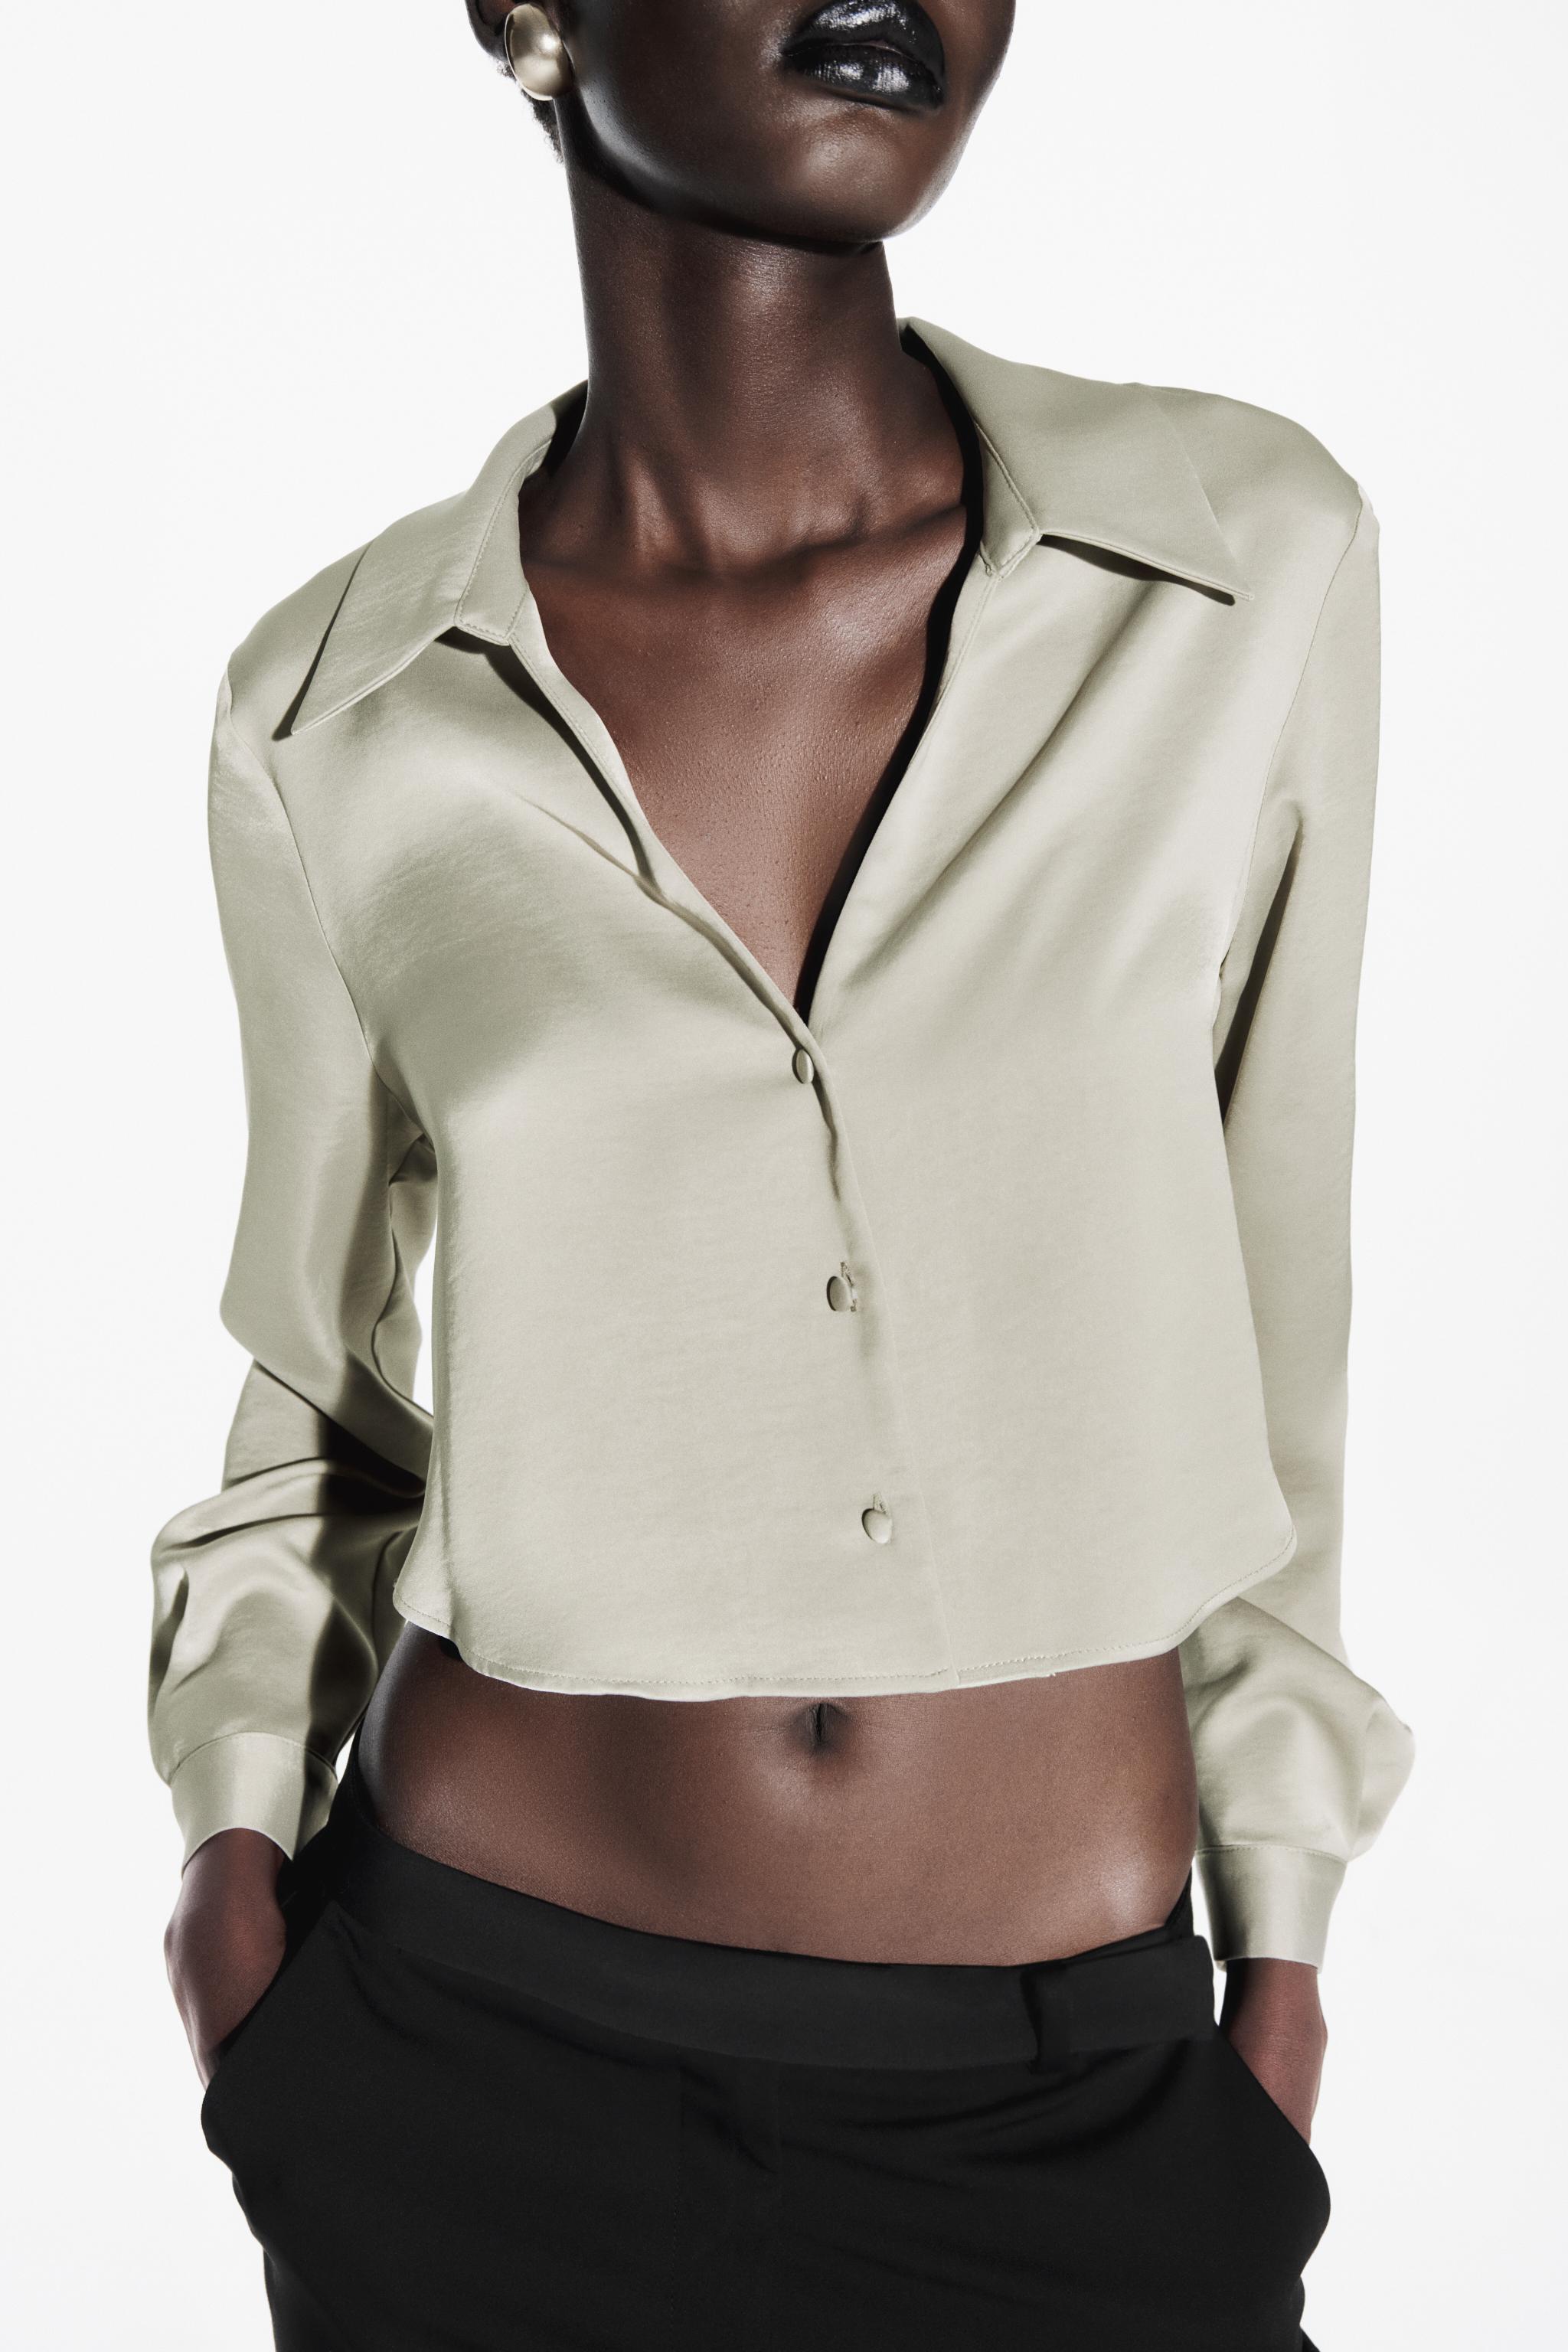 Zara satin shirt light green, Women's Fashion, Tops, Blouses on